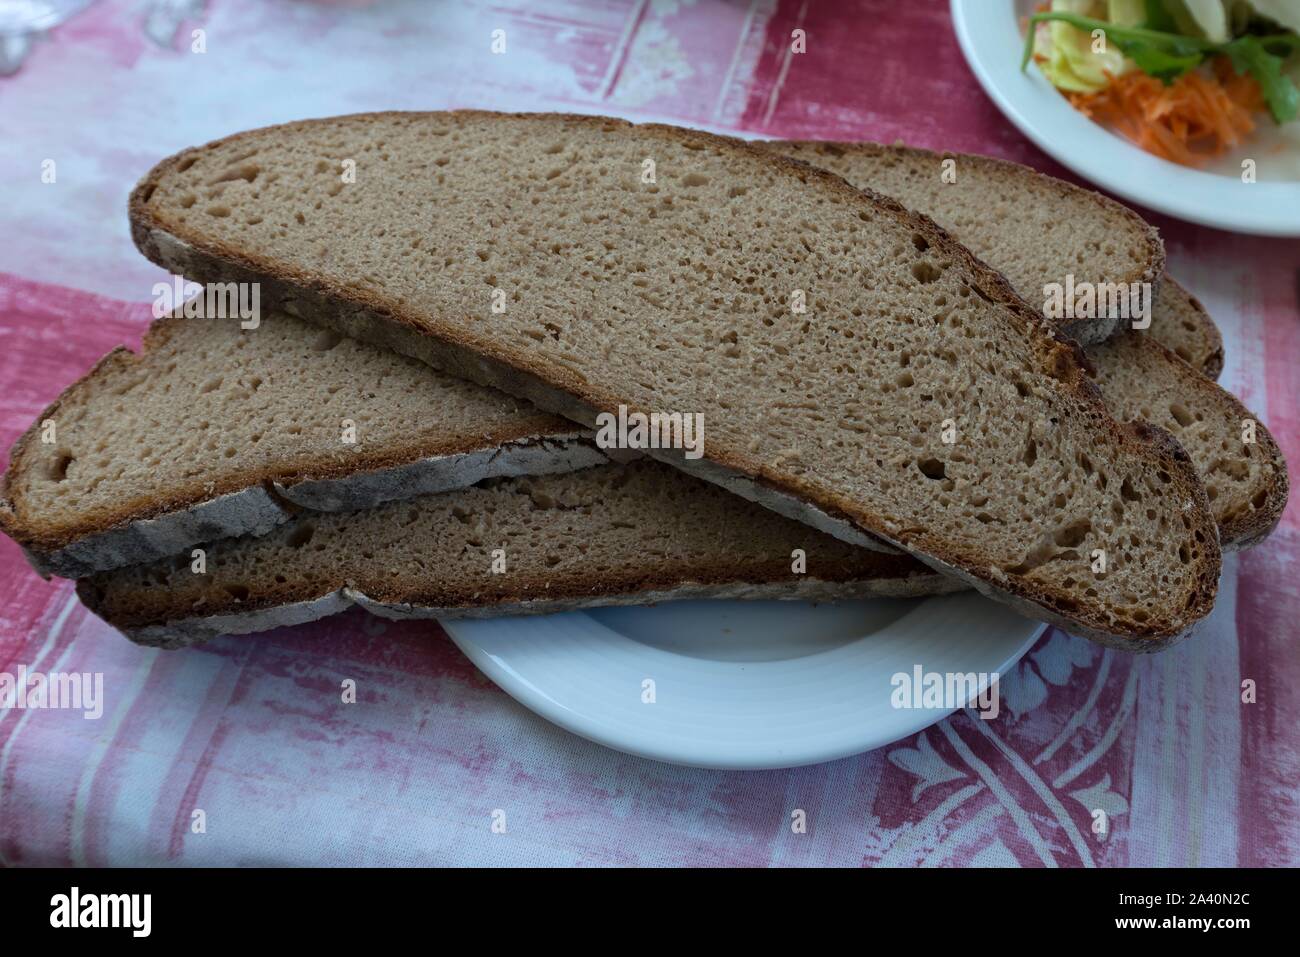 Sliced bread on a plate, Bavaria, Germany Stock Photo